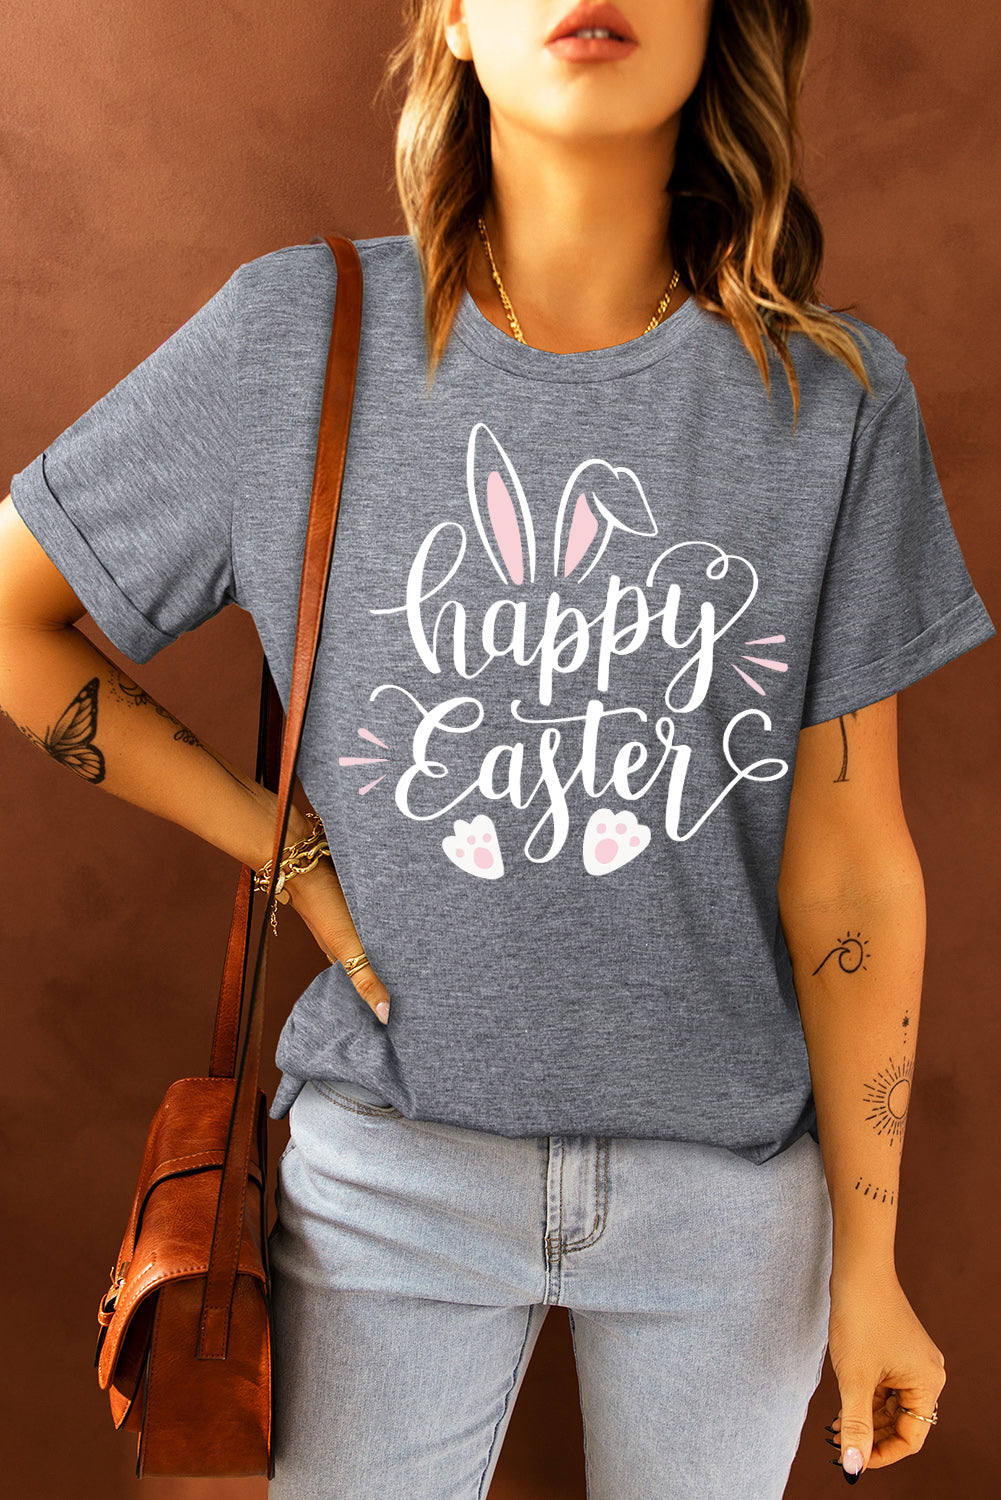 LC25214597-11-S, LC25214597-11-M, LC25214597-11-L, LC25214597-11-XL, LC25214597-11-2XL, Gray Happy Easter Bunny Graphic Print Tee Short Sleeve T-Shirt Top